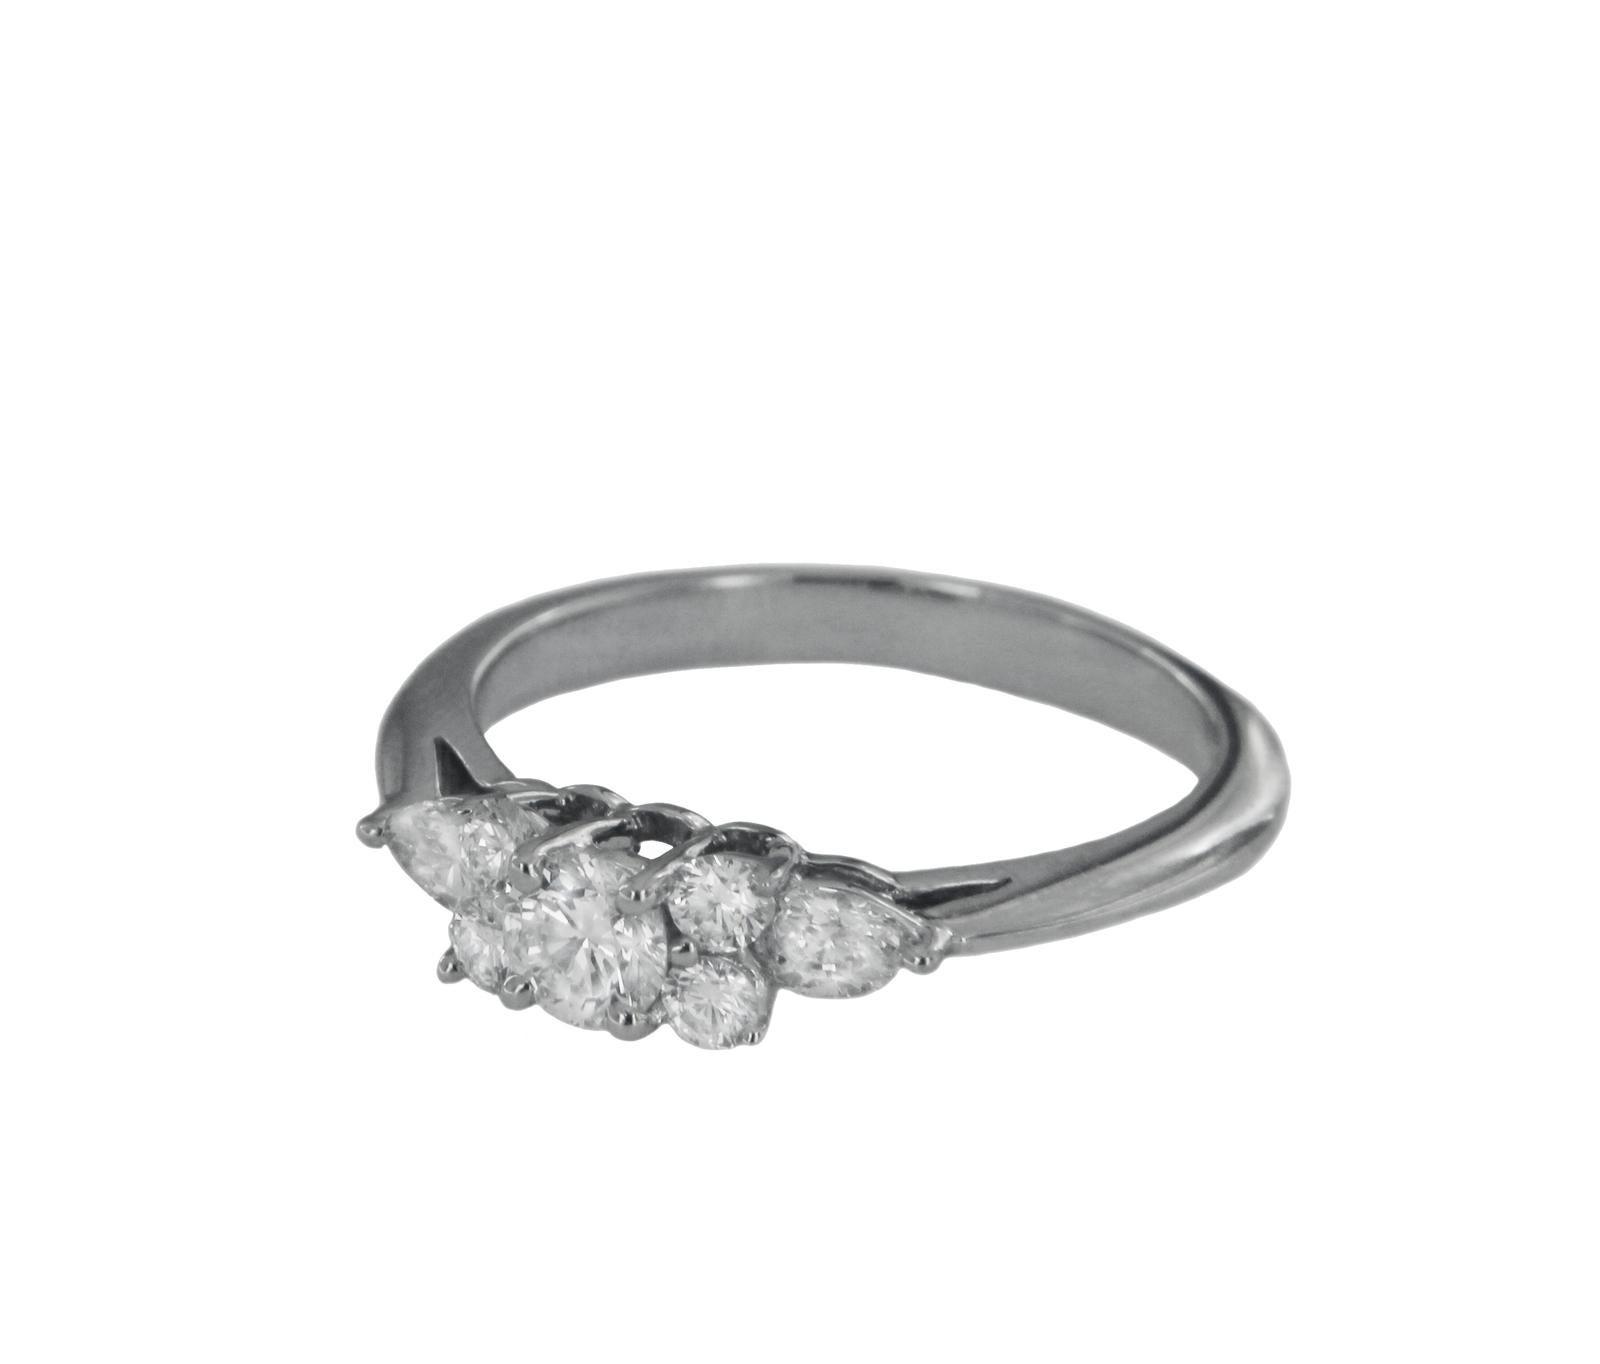 TIFFANY & CO. SEVEN STONE DIAMOND PLATINUM RING. 

-Mint condition
-Platinum
-Ring size: 5.5
-Width: 2-4.5mm
-Diamonds: 0.8
-Comes with Tiffany box.